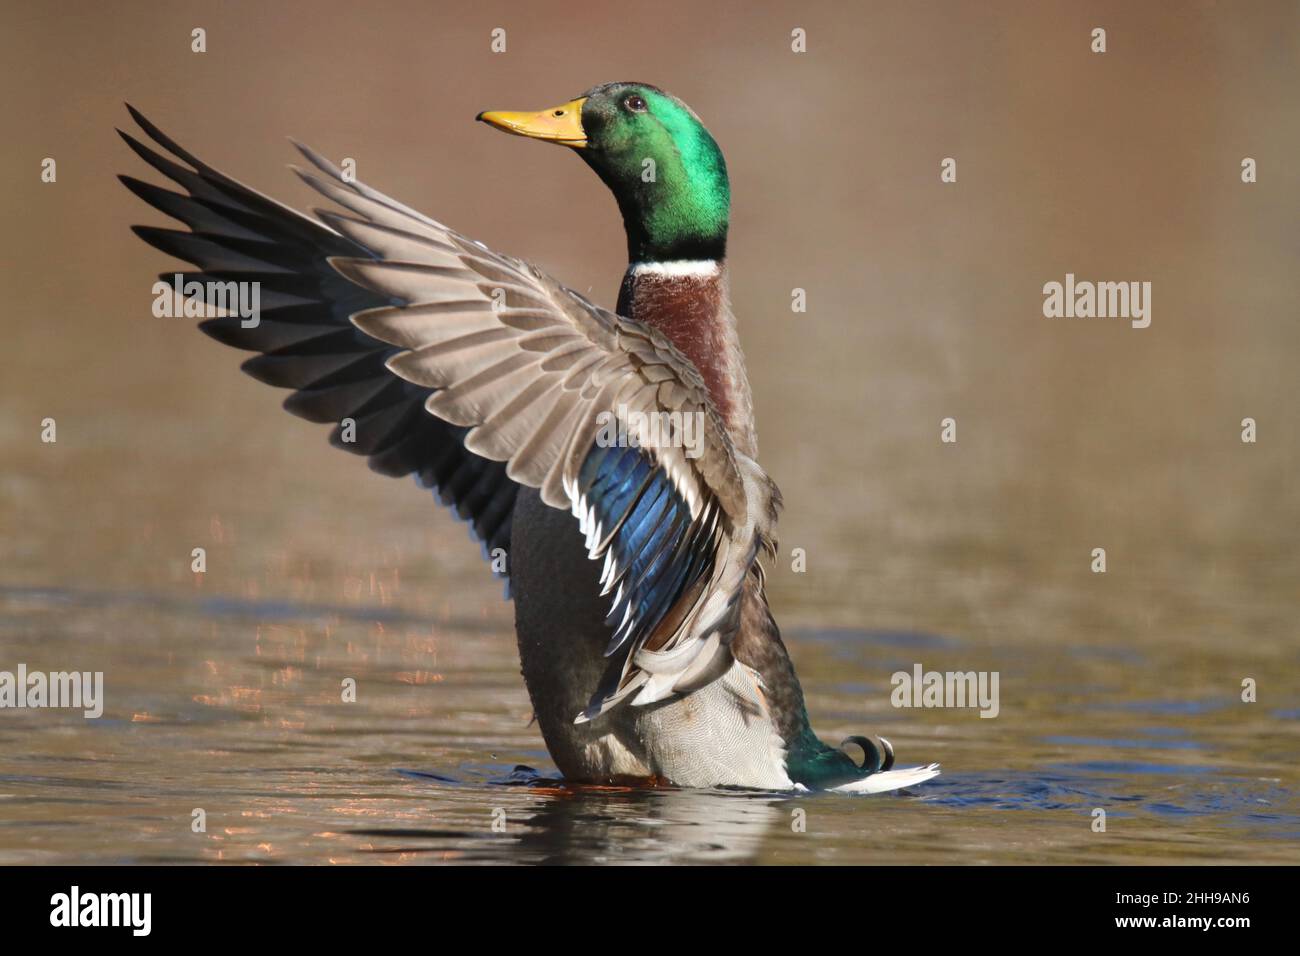 Drake Mallard duck Anas platyrhynchos flapping wings to shake off water Stock Photo